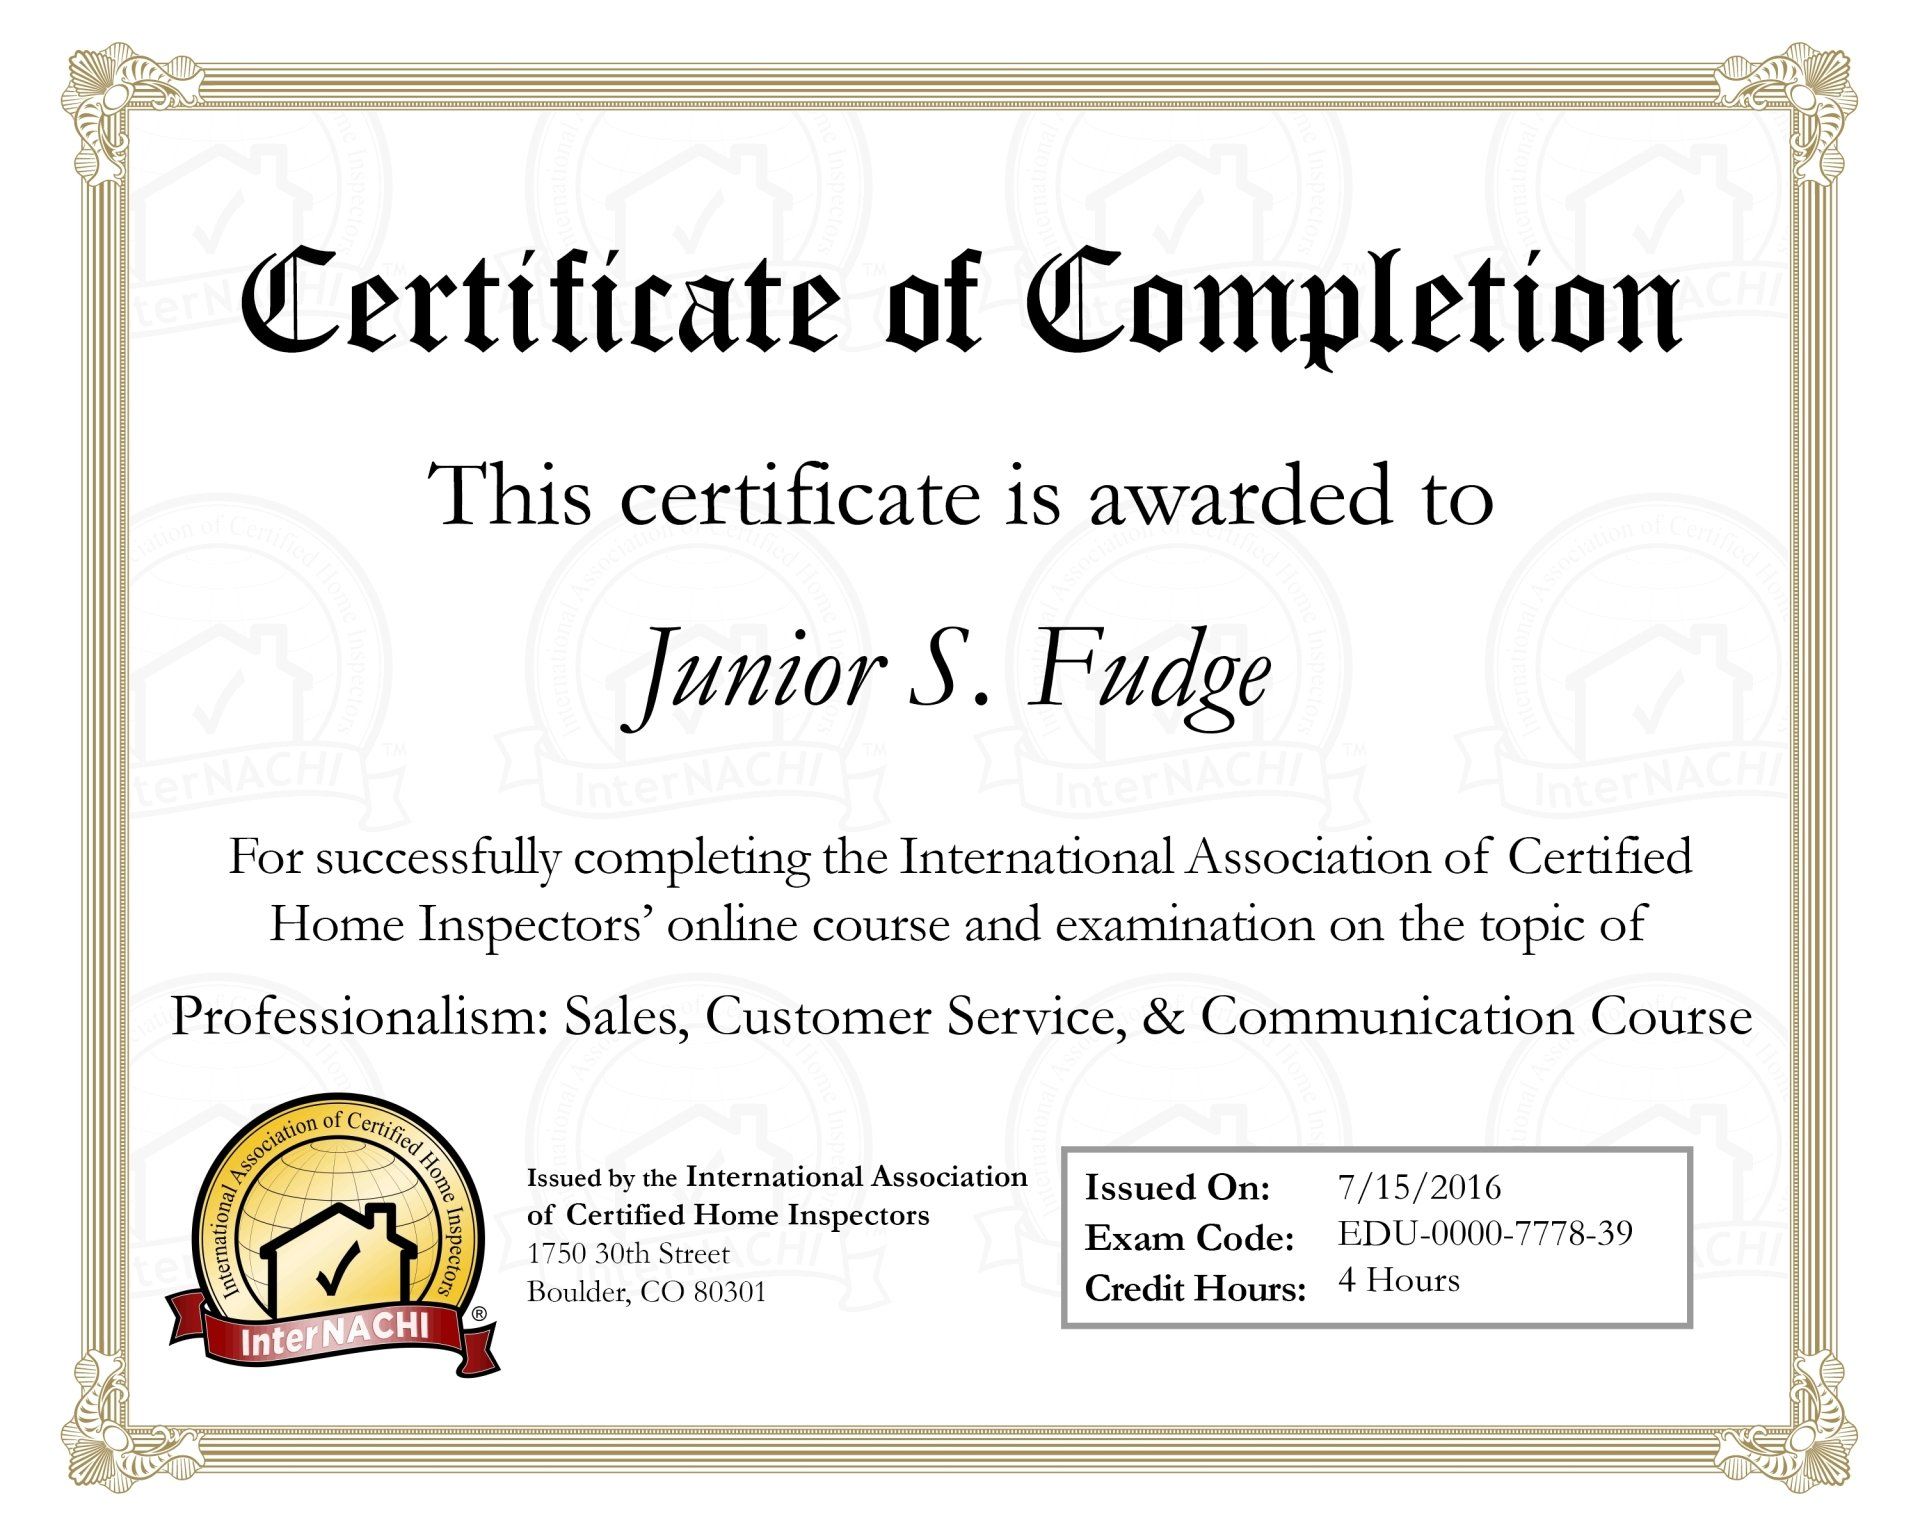 Professionalism sales service certificate - Prince Edward Island home inspector